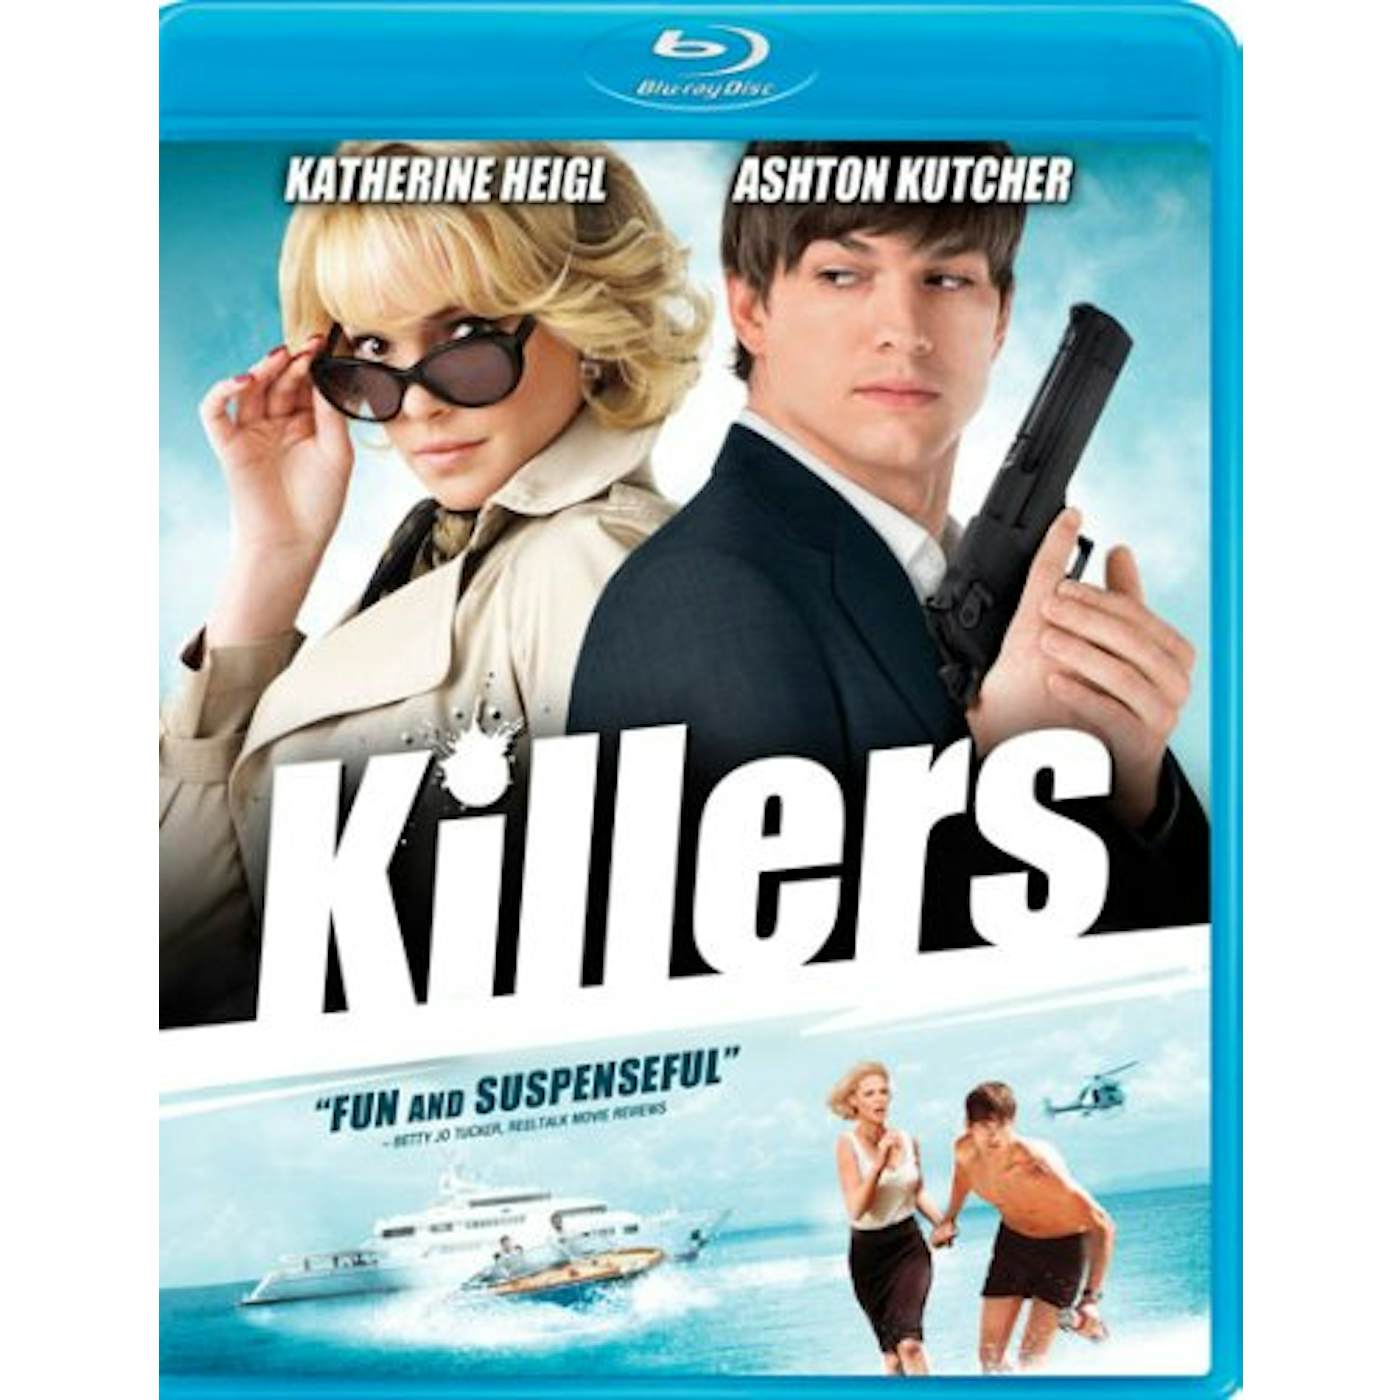 The Killers (2010) Blu-ray